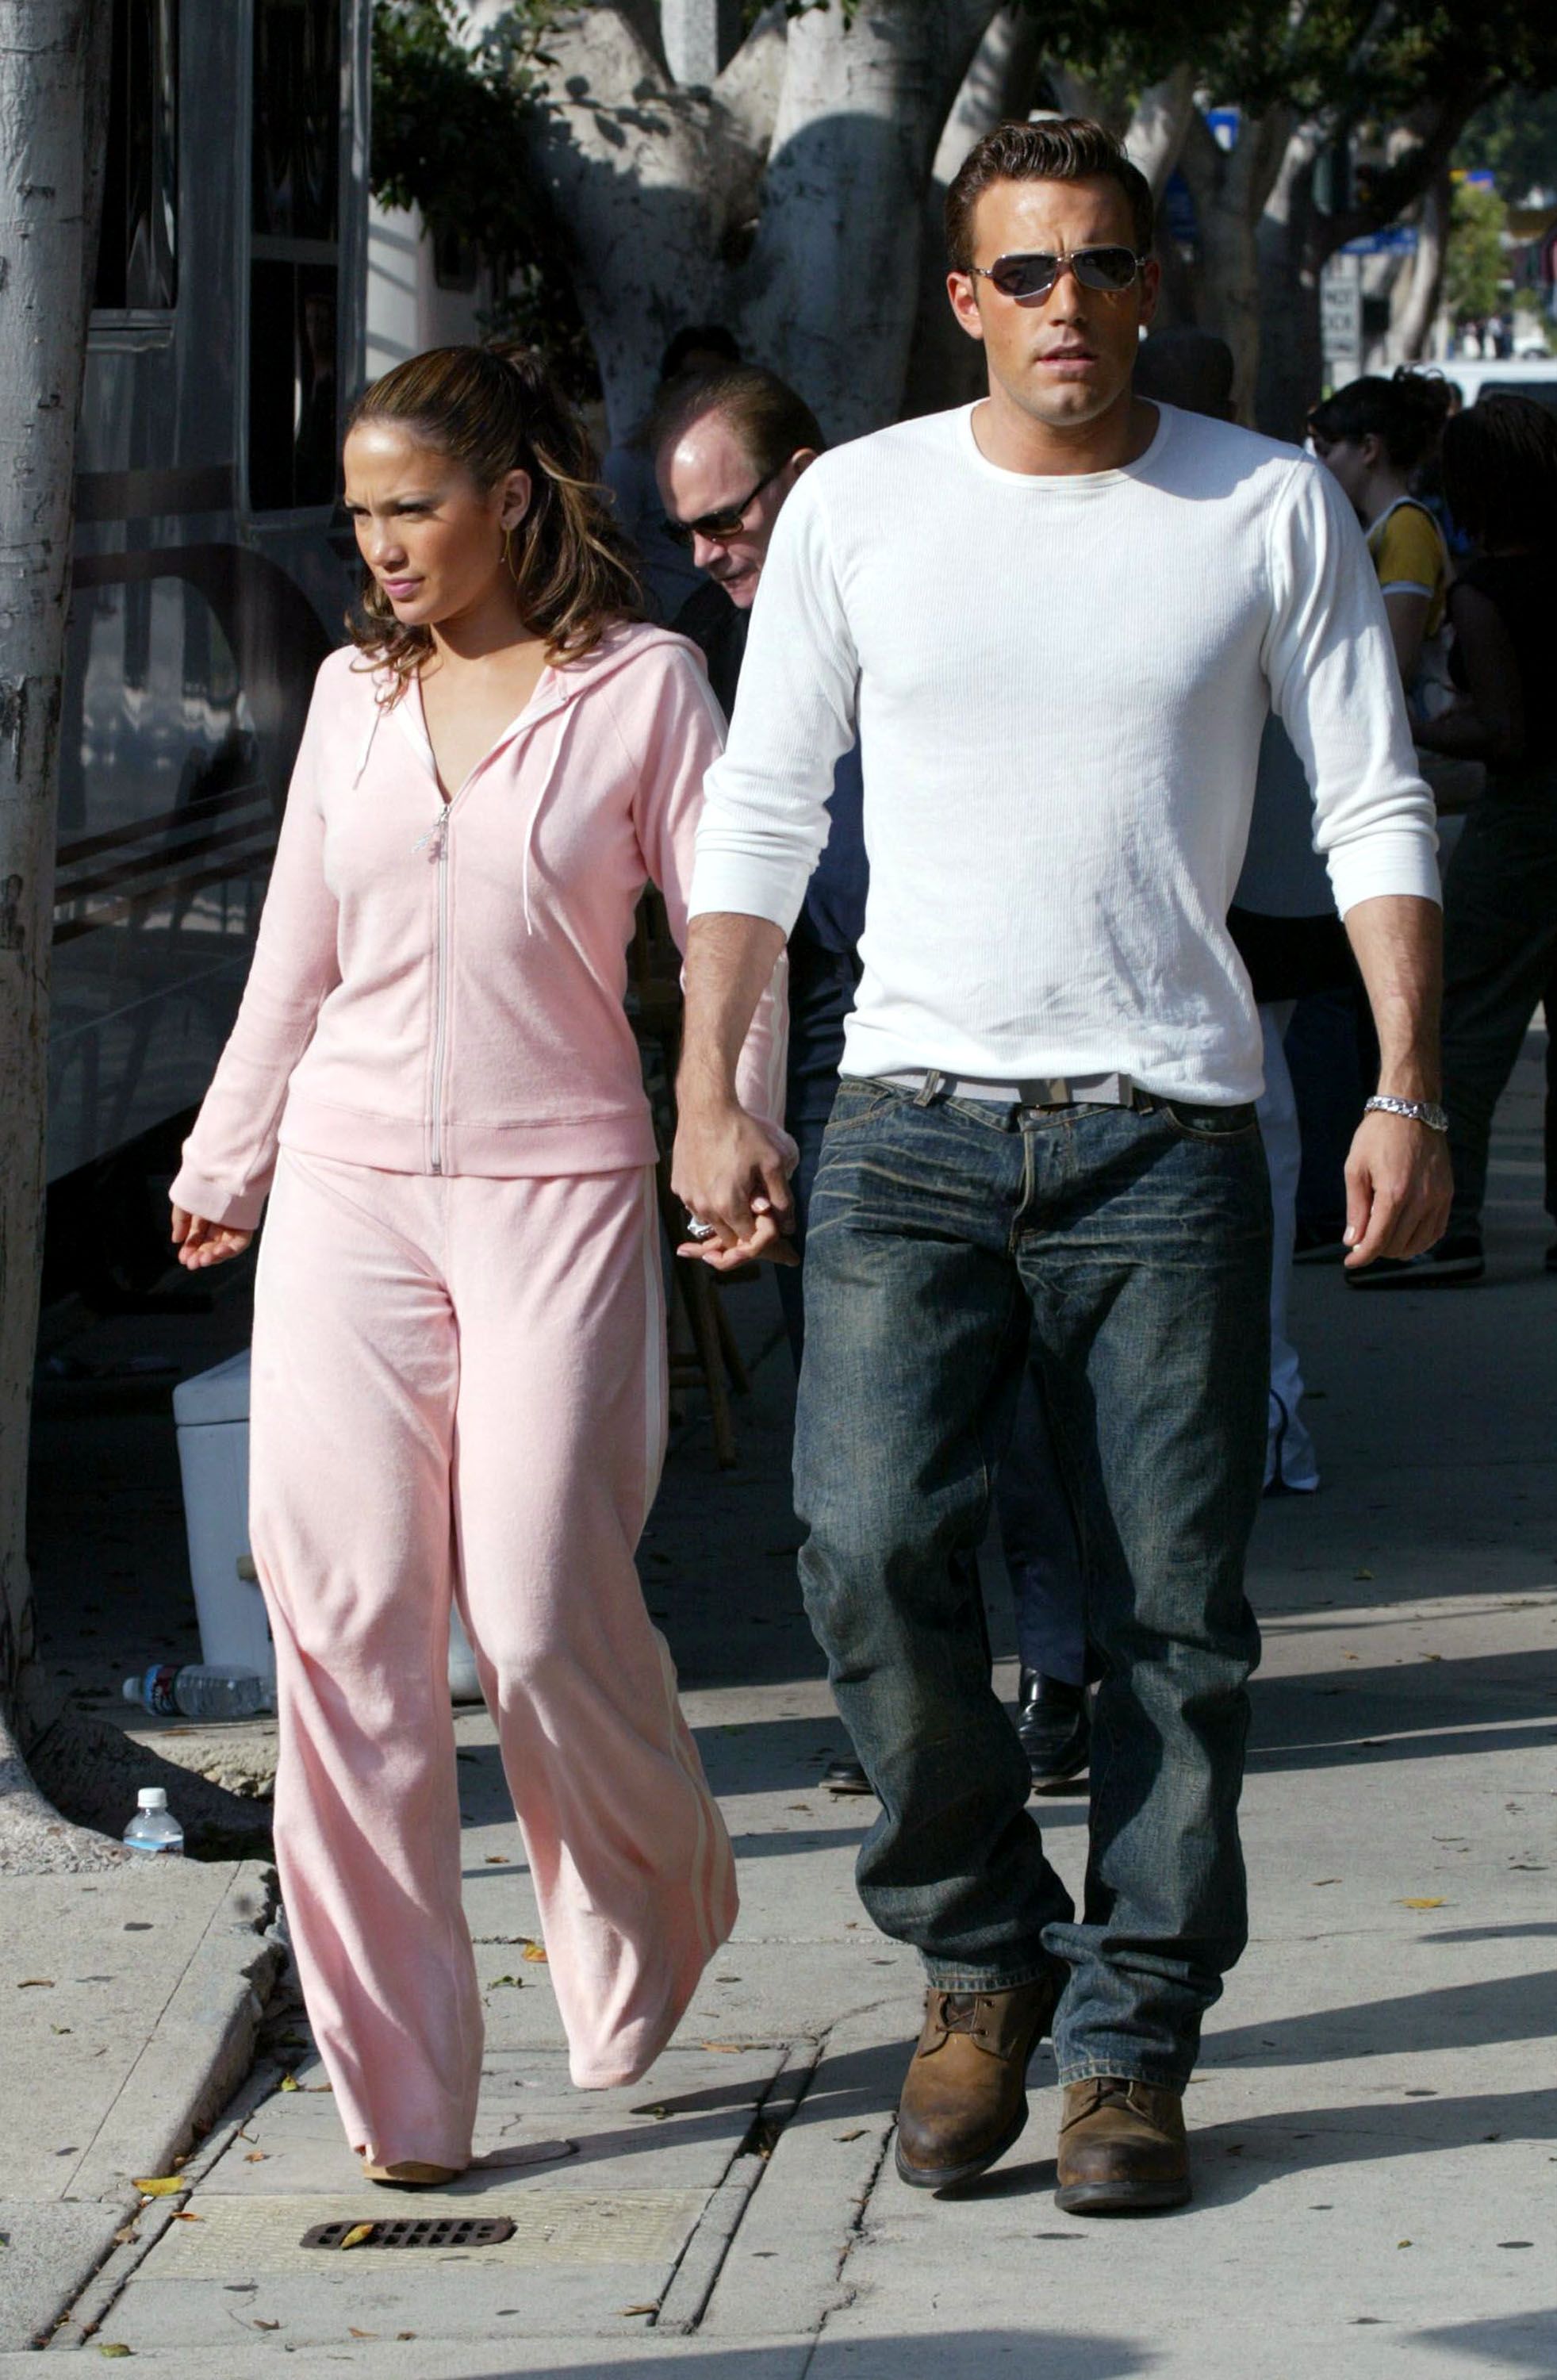 Jennifer Lopez Has Wide-Leg Jeans Moment on Date with Ben Affleck